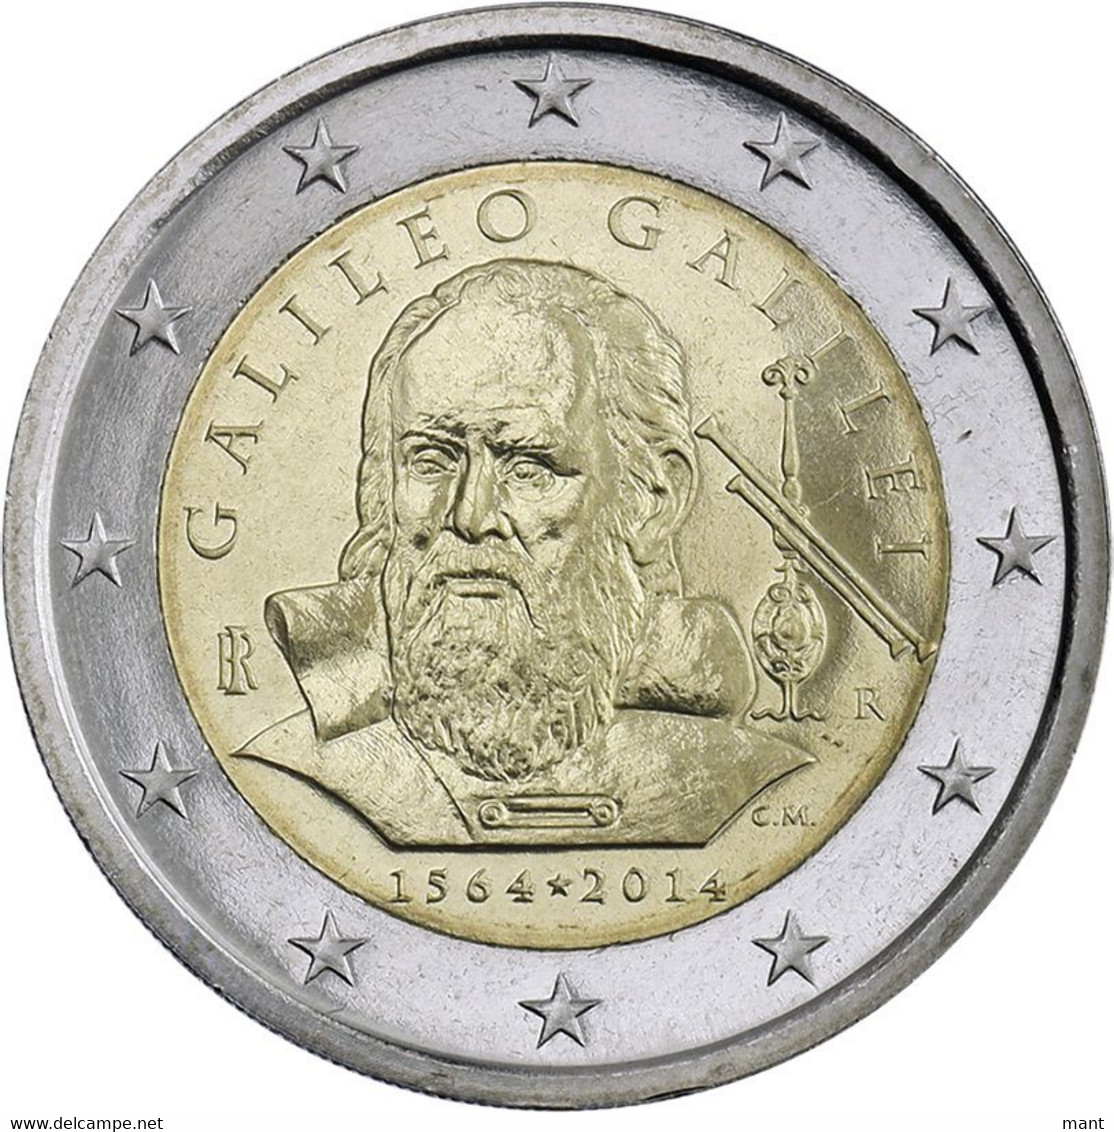 ITALIA MONETA DA 2 EURO COMMEMORATIVO GALILEO GALILEI 2014 FDC - Herdenking